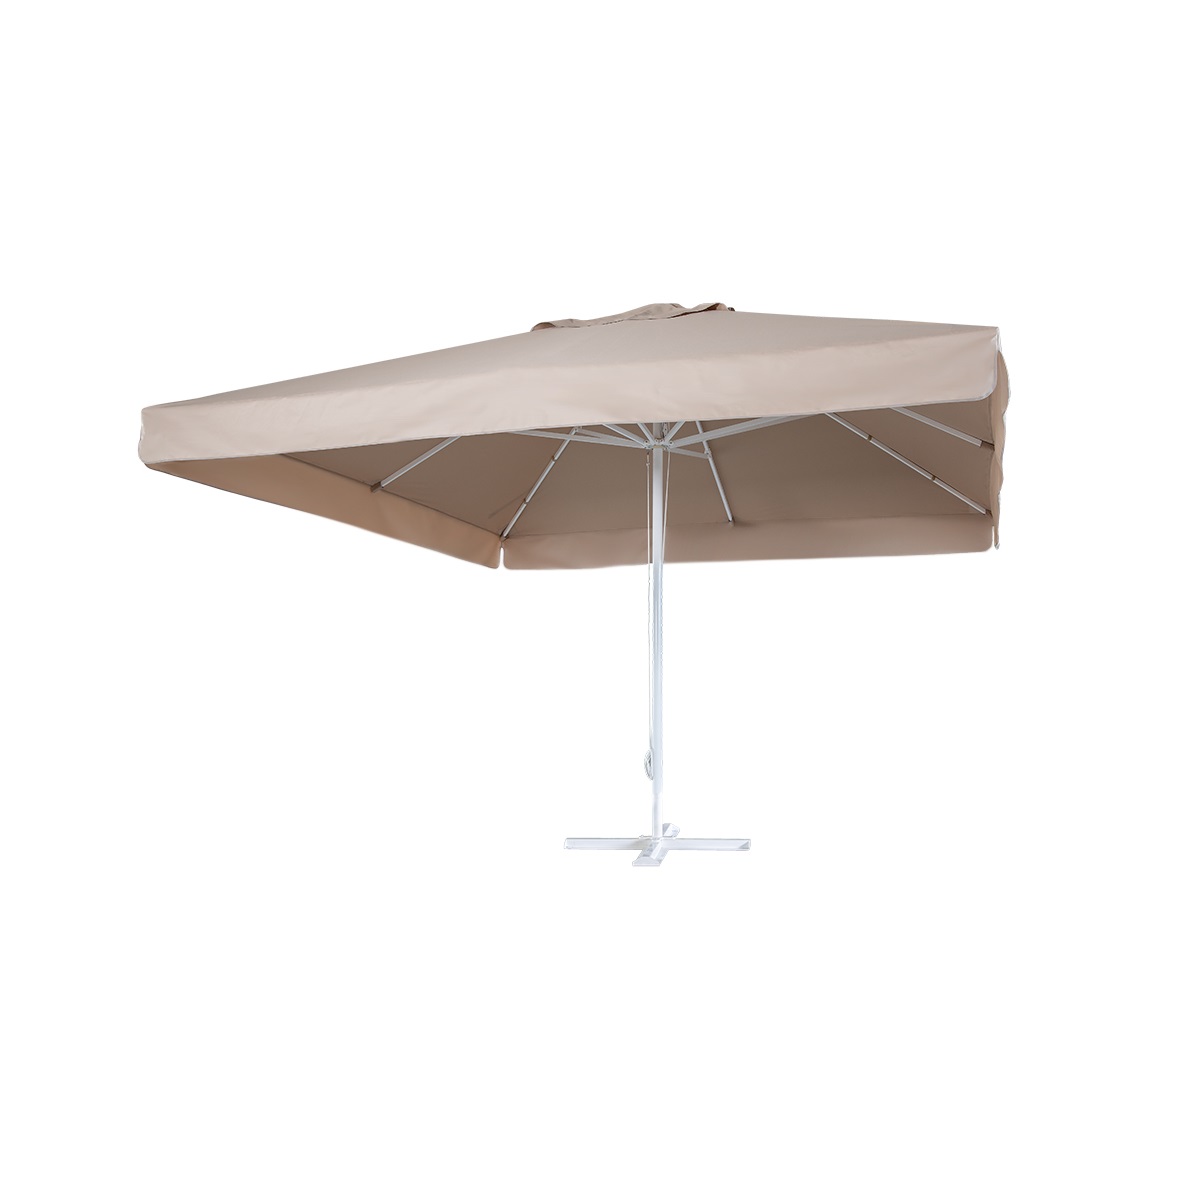 Зонт с центральной опорой 4,0х4,0 м, СТАНДАРТ 60 квадратный (Ткань Oxford 600D), бежевый